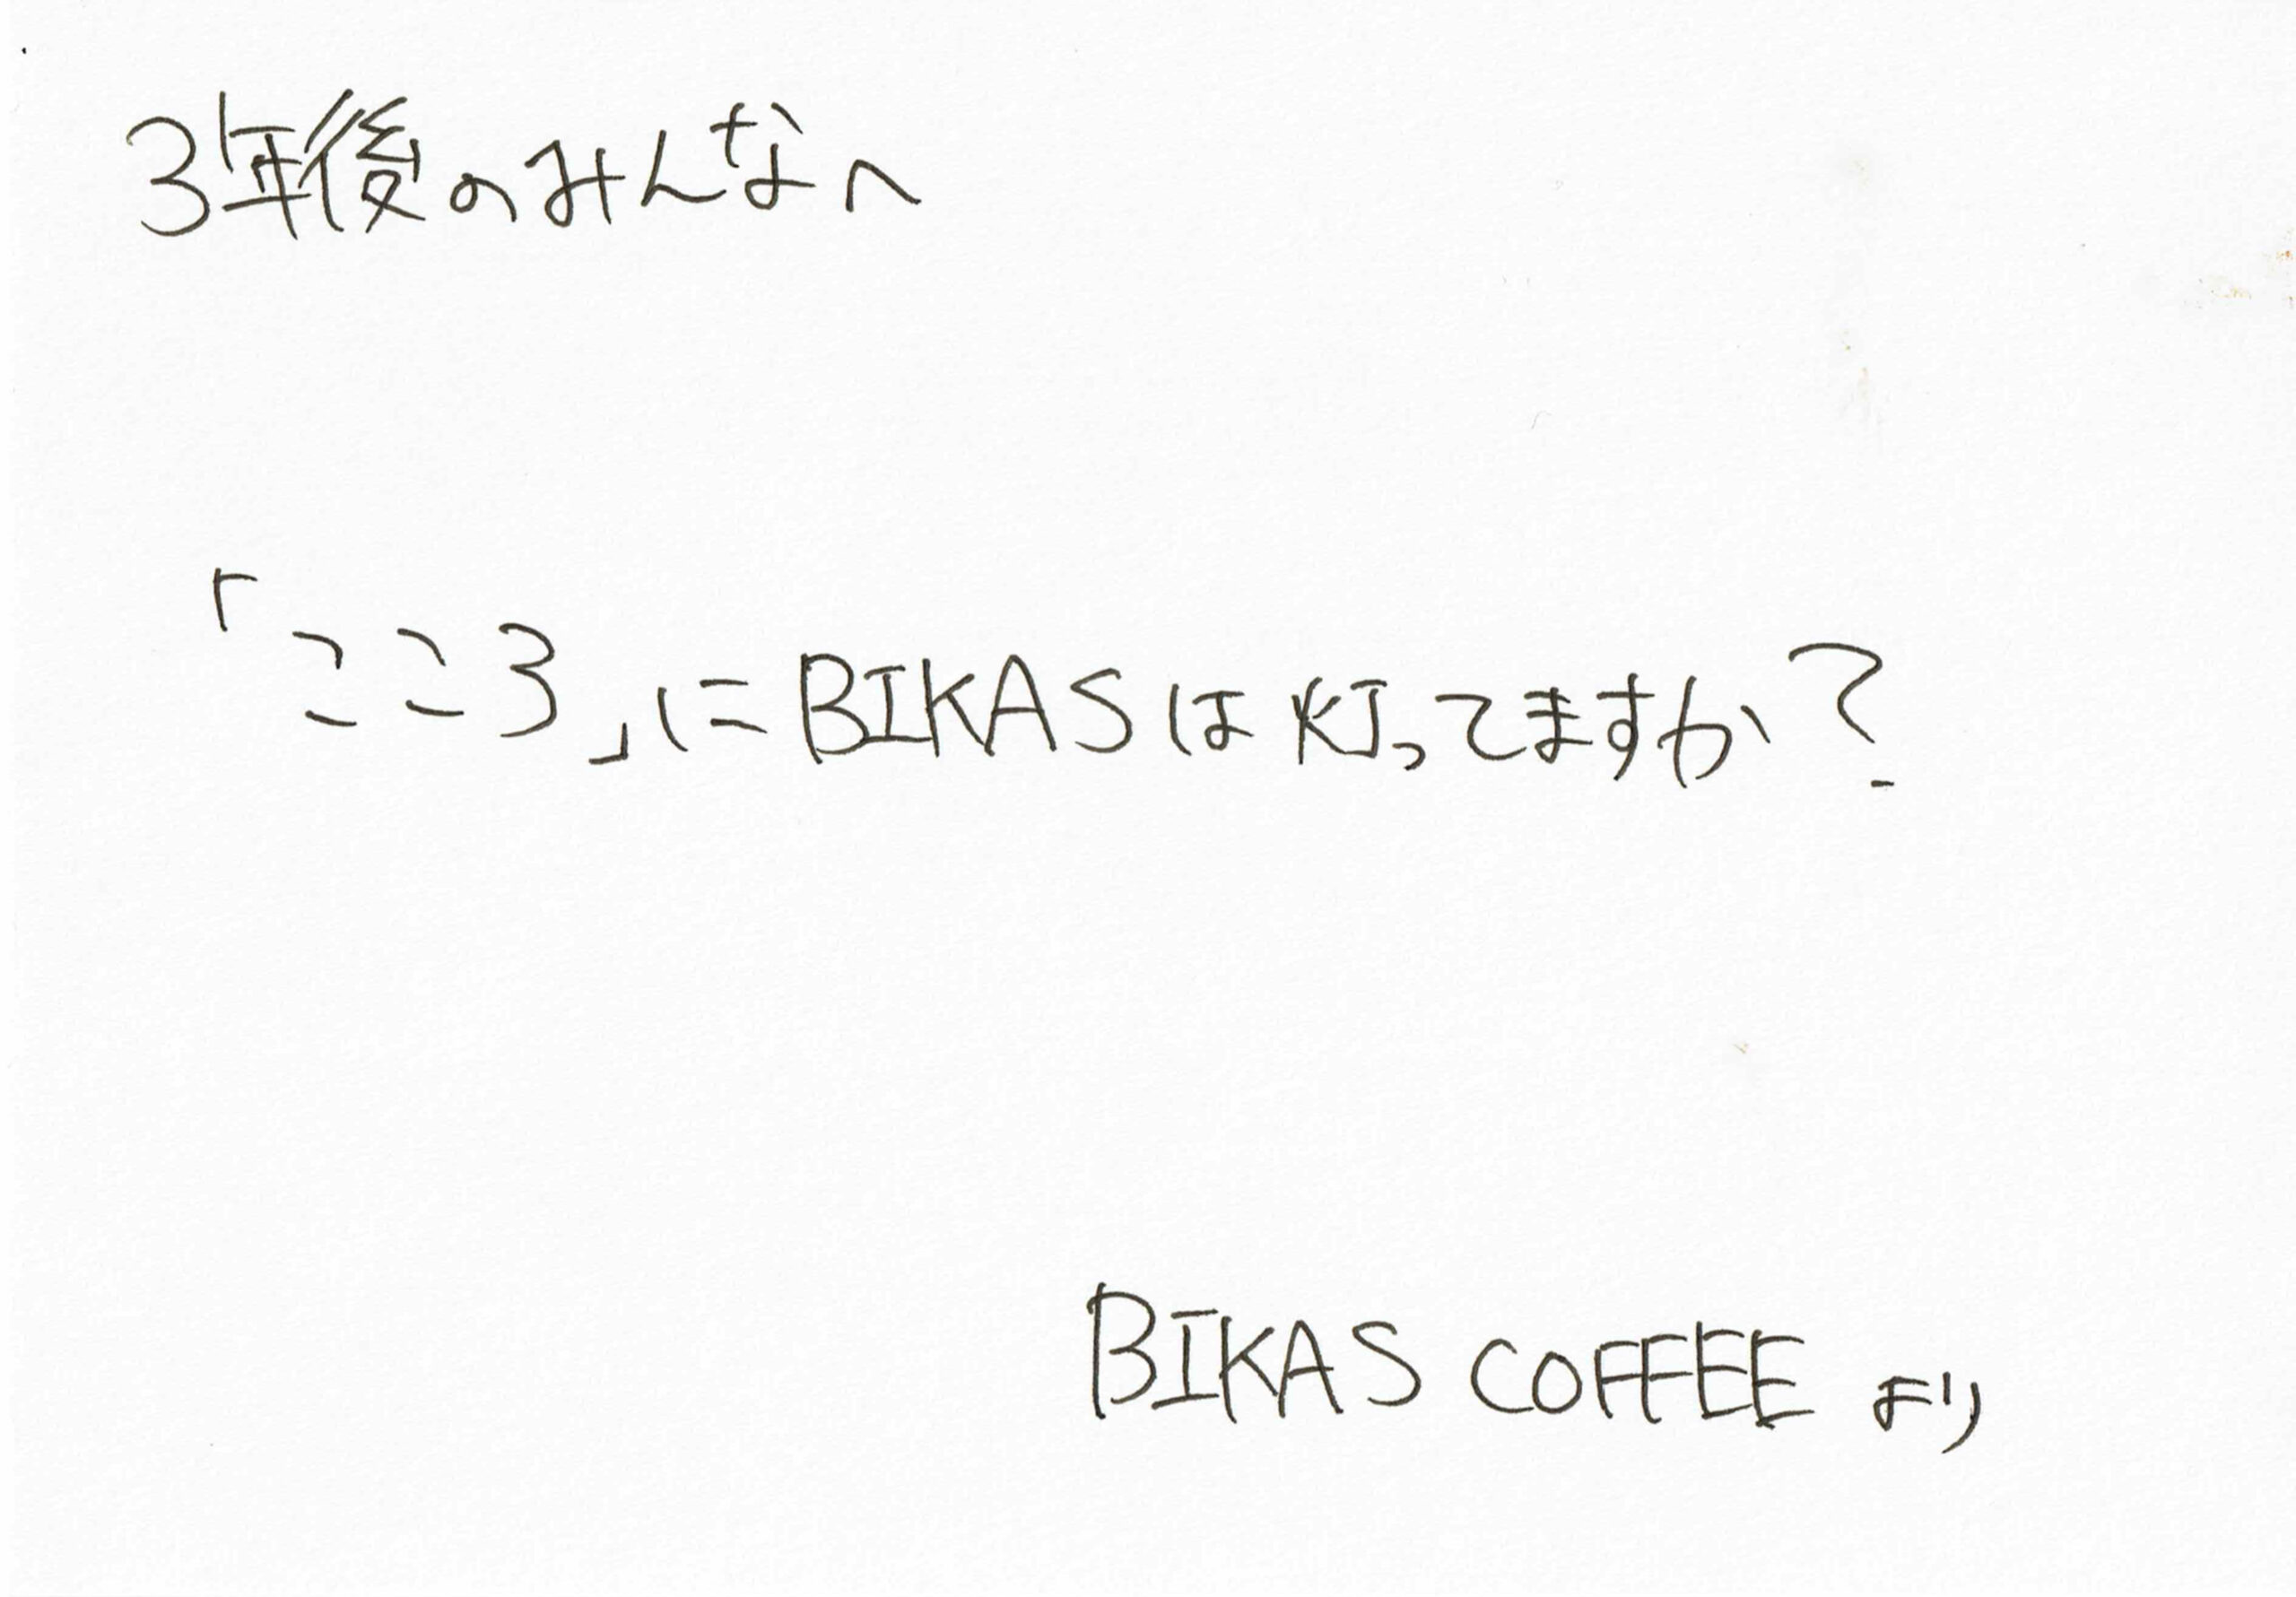 BIKAS COFFEEからの手紙